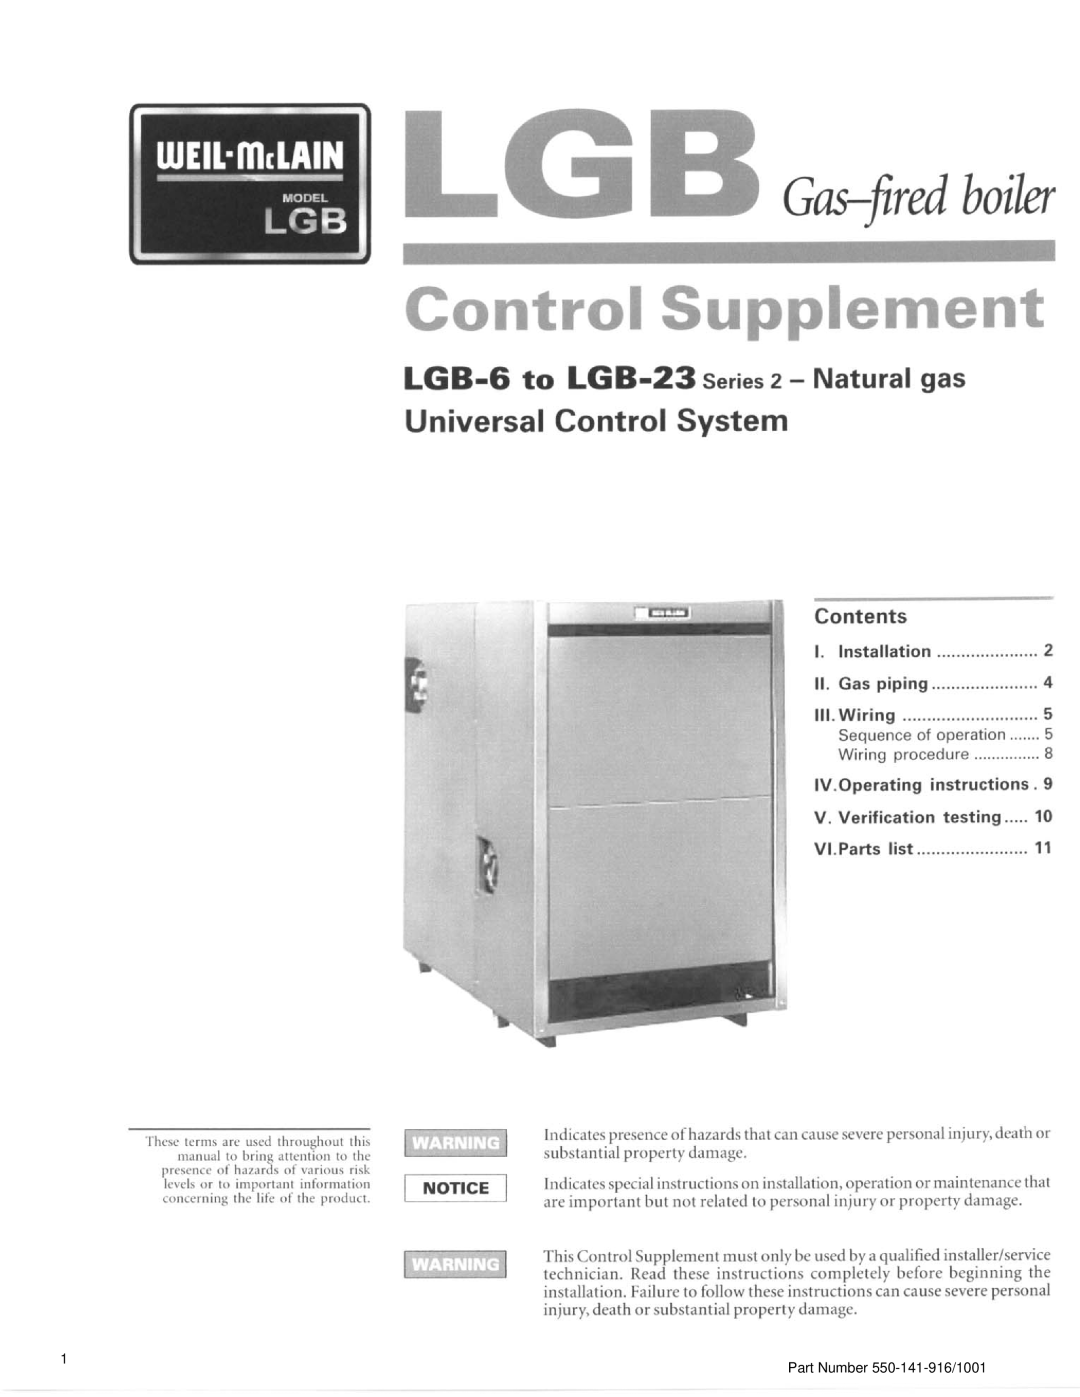 Weil-McLain LGB-23 manual Part Number 550-141-916/1001 